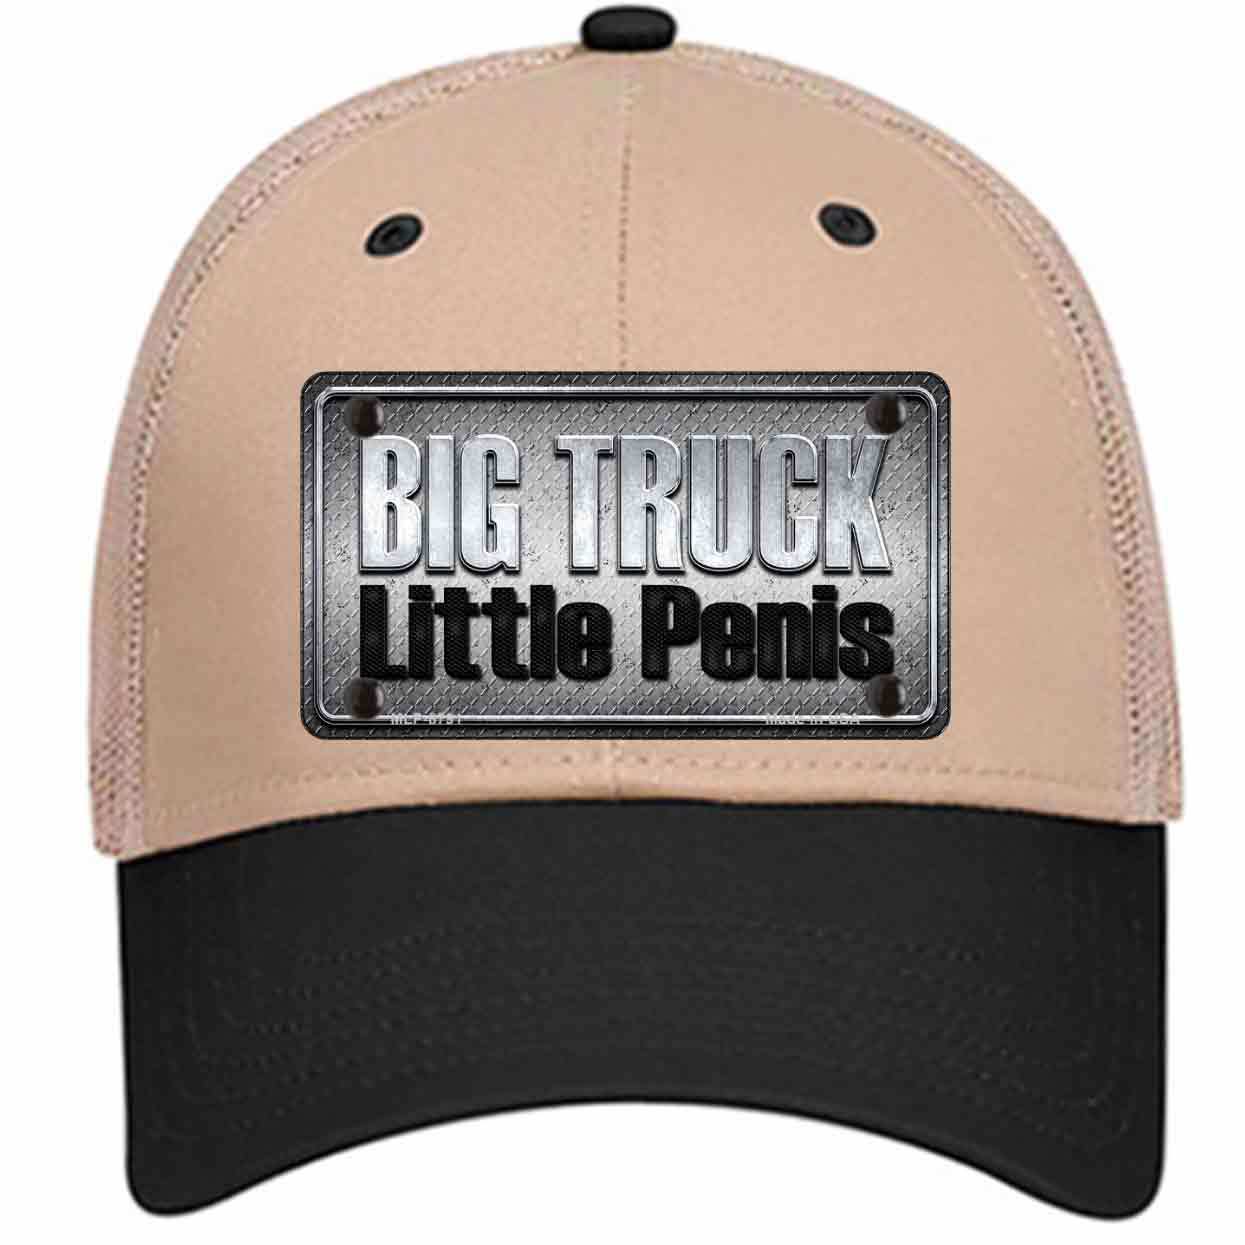 Primary image for Big Truck Little Penis Novelty Khaki Mesh License Plate Hat